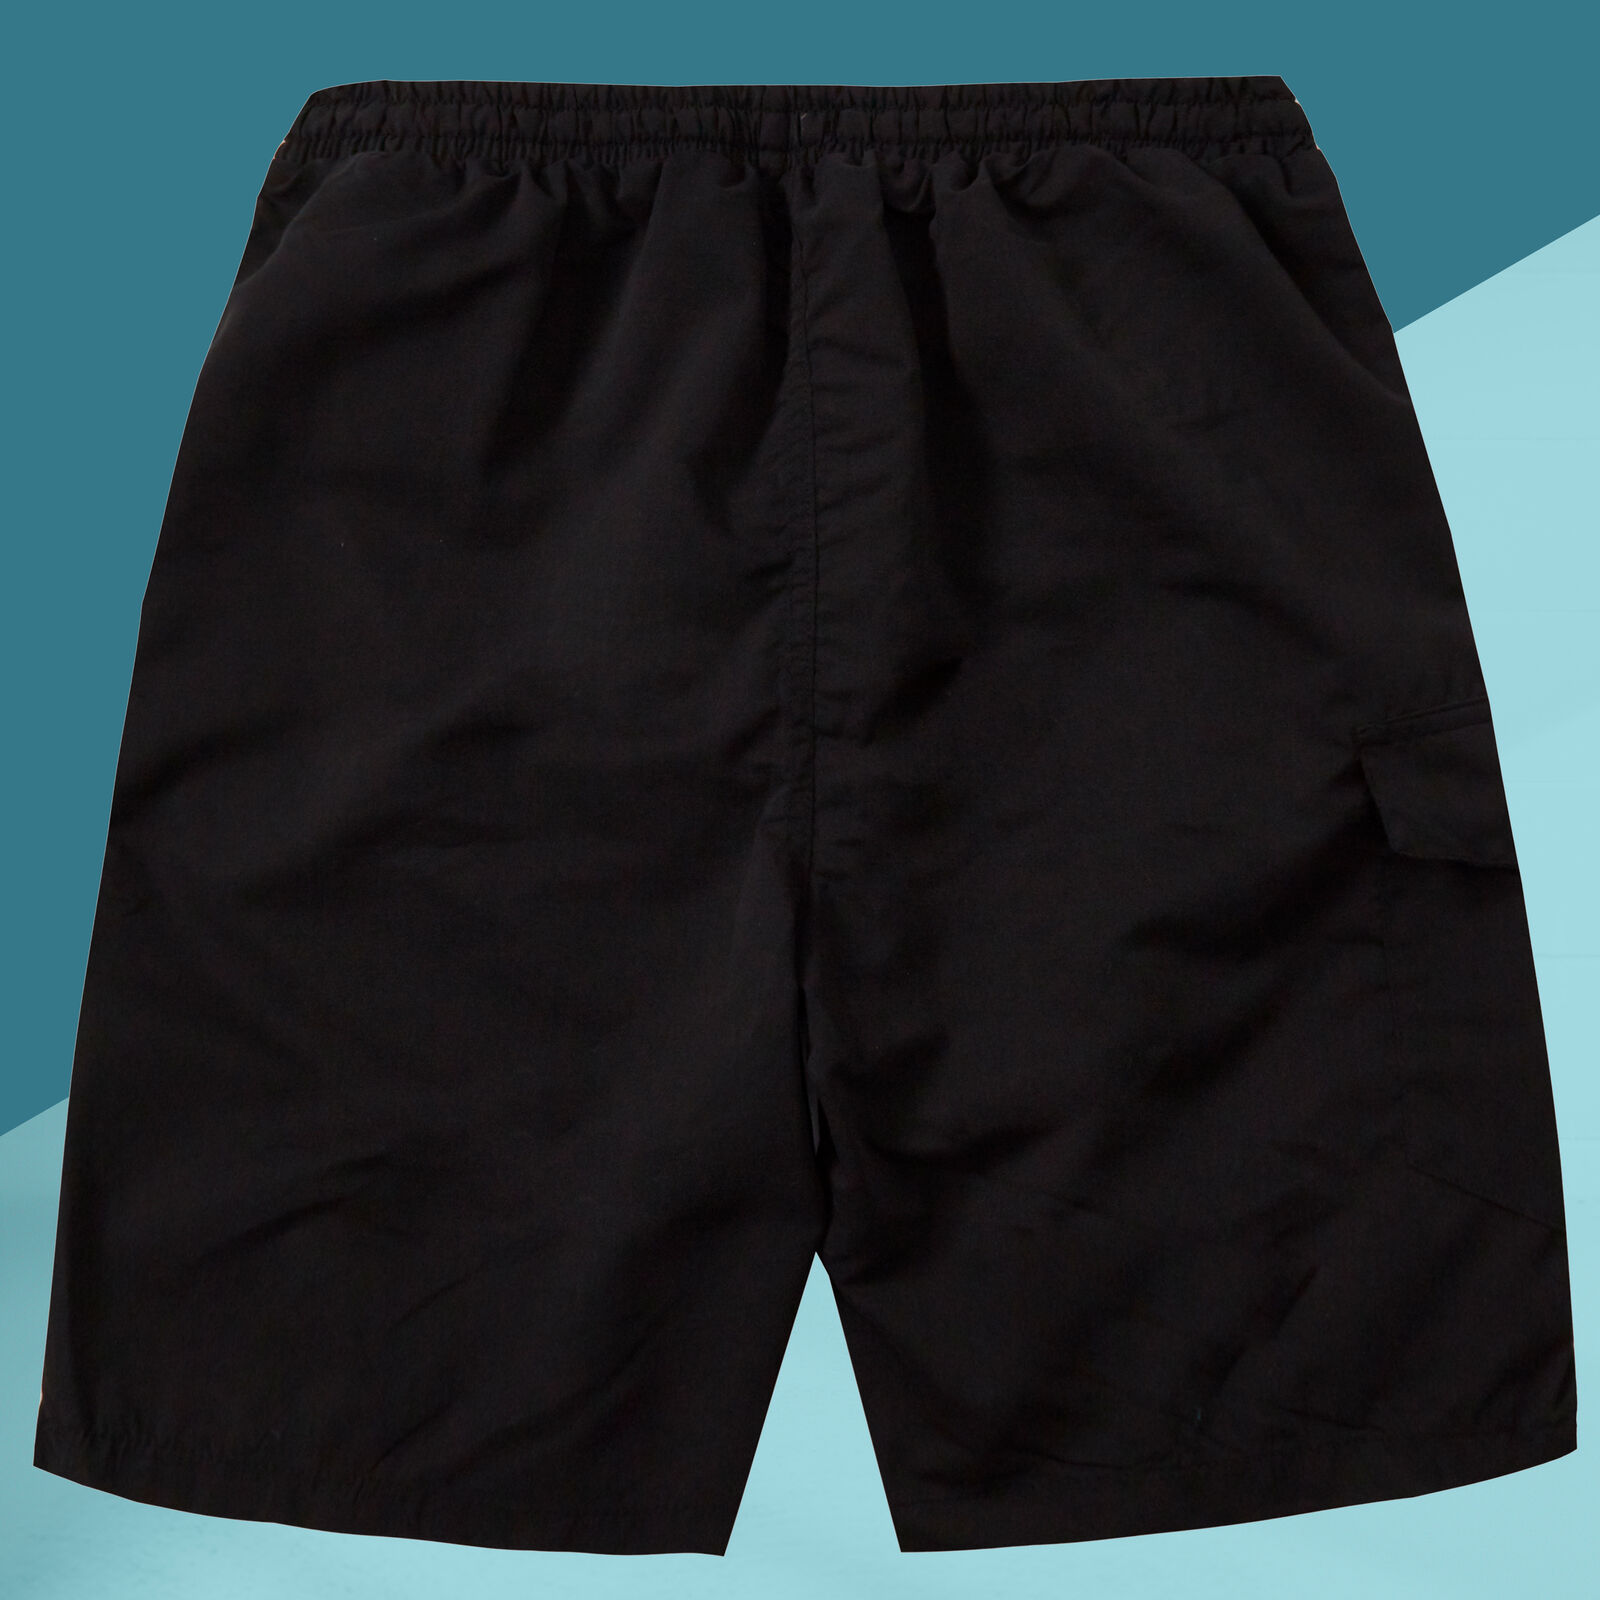 Mens Lightweight Quick Dry Swim Wear Shorts Trunks Pockets Surf Board Swim XS-6X | eBay